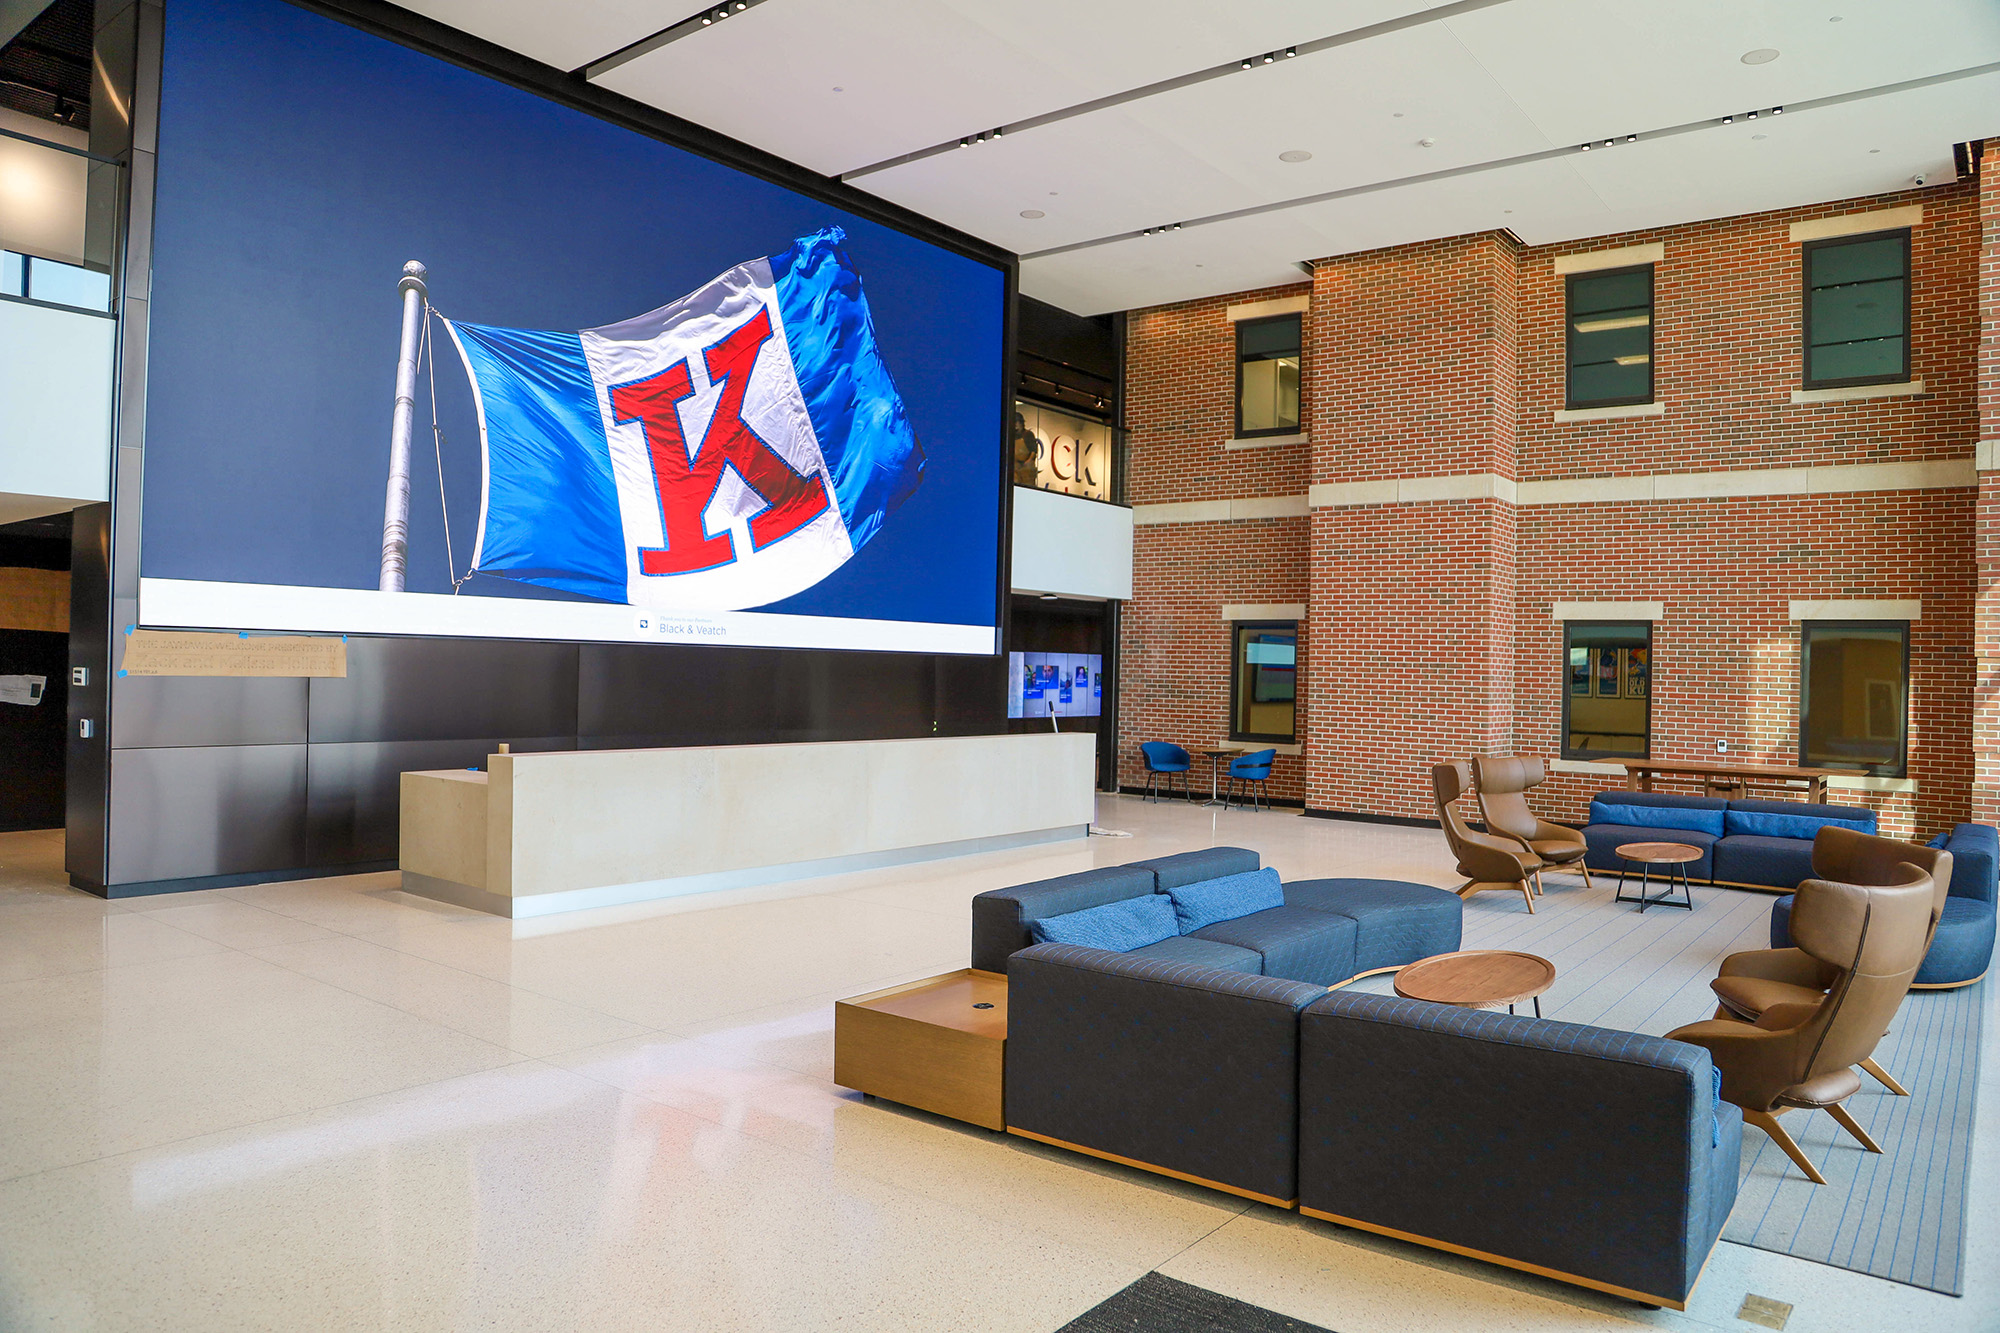 Jayhawk Welcome Center lobby featuring KU flag.